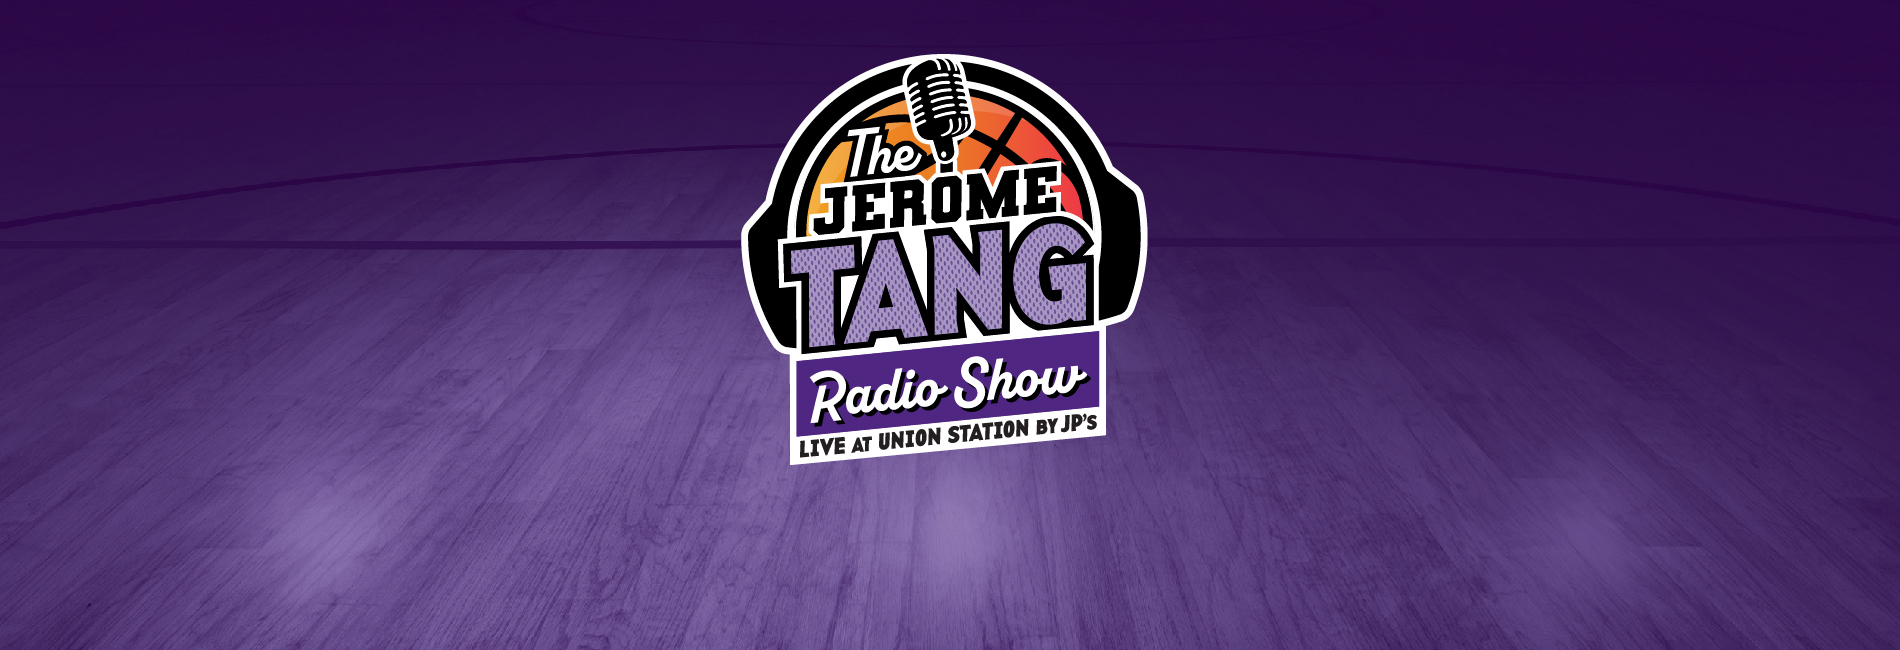 The Jerome Tang Radio Show